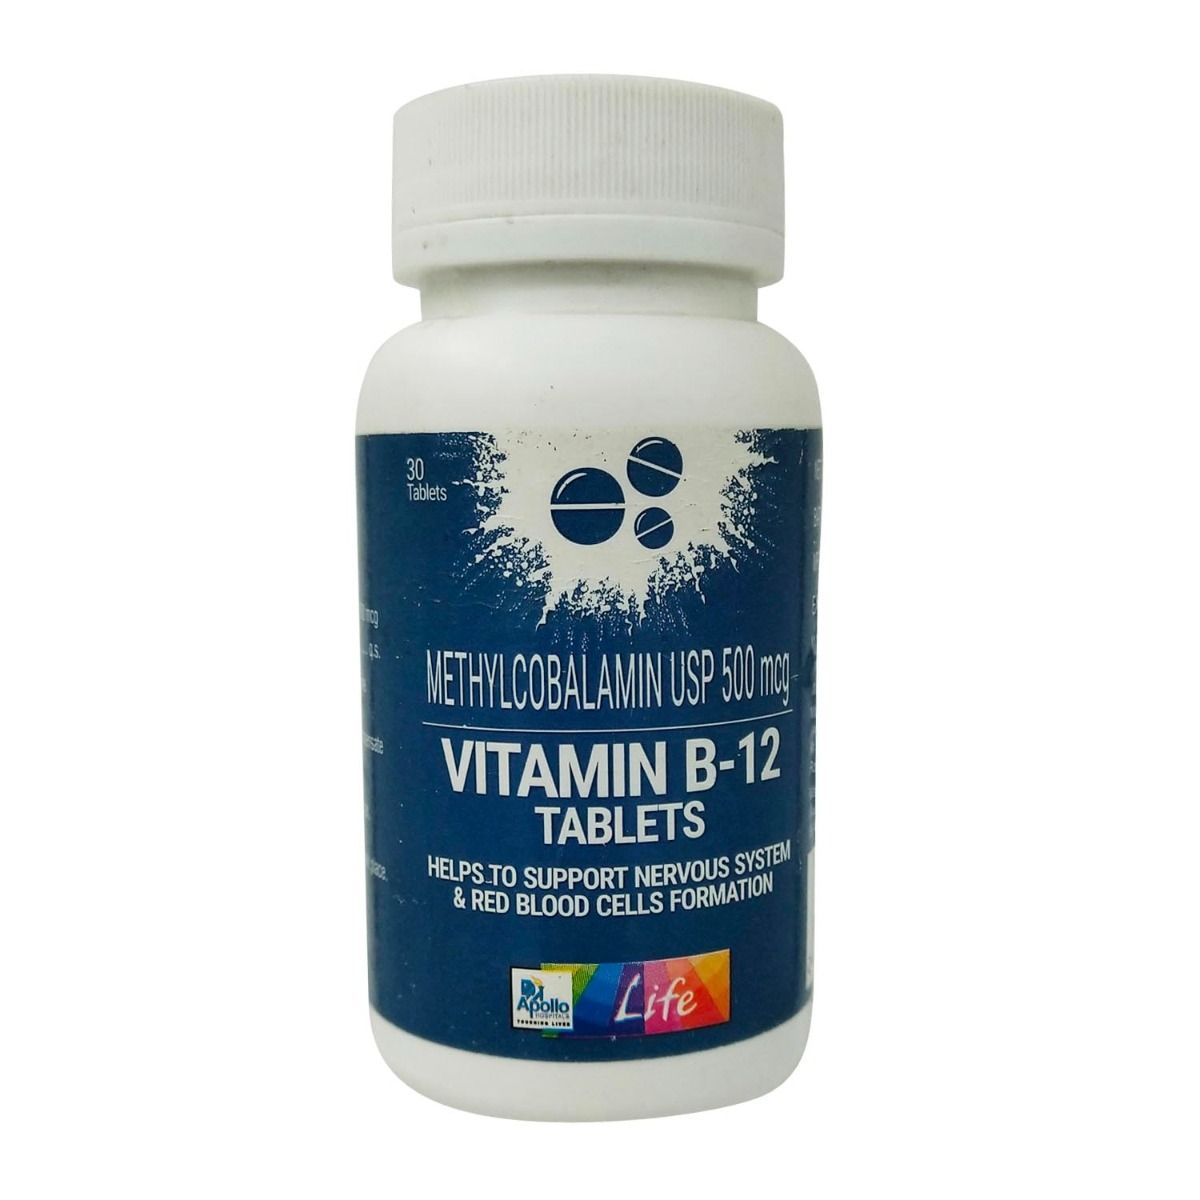 Buy Apollo Life Vitamin B-12, 30 Tablets Online